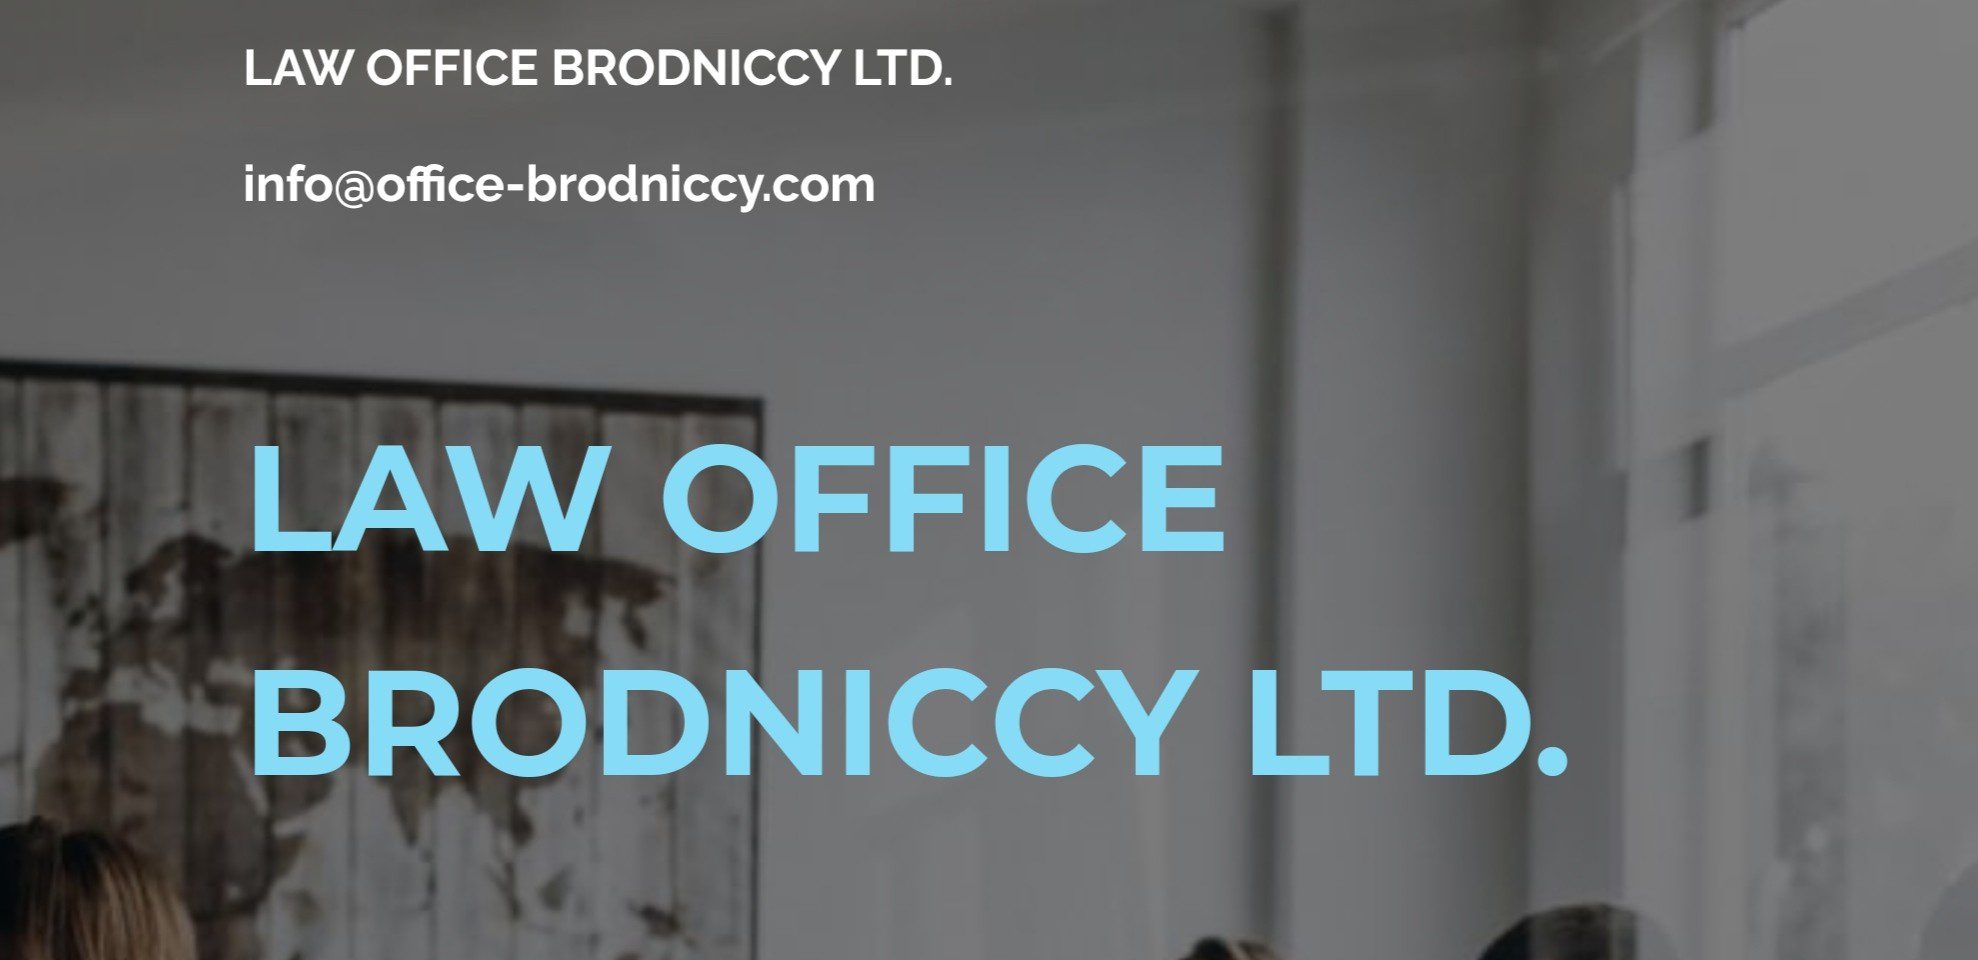 Office-brodniccy com сайт